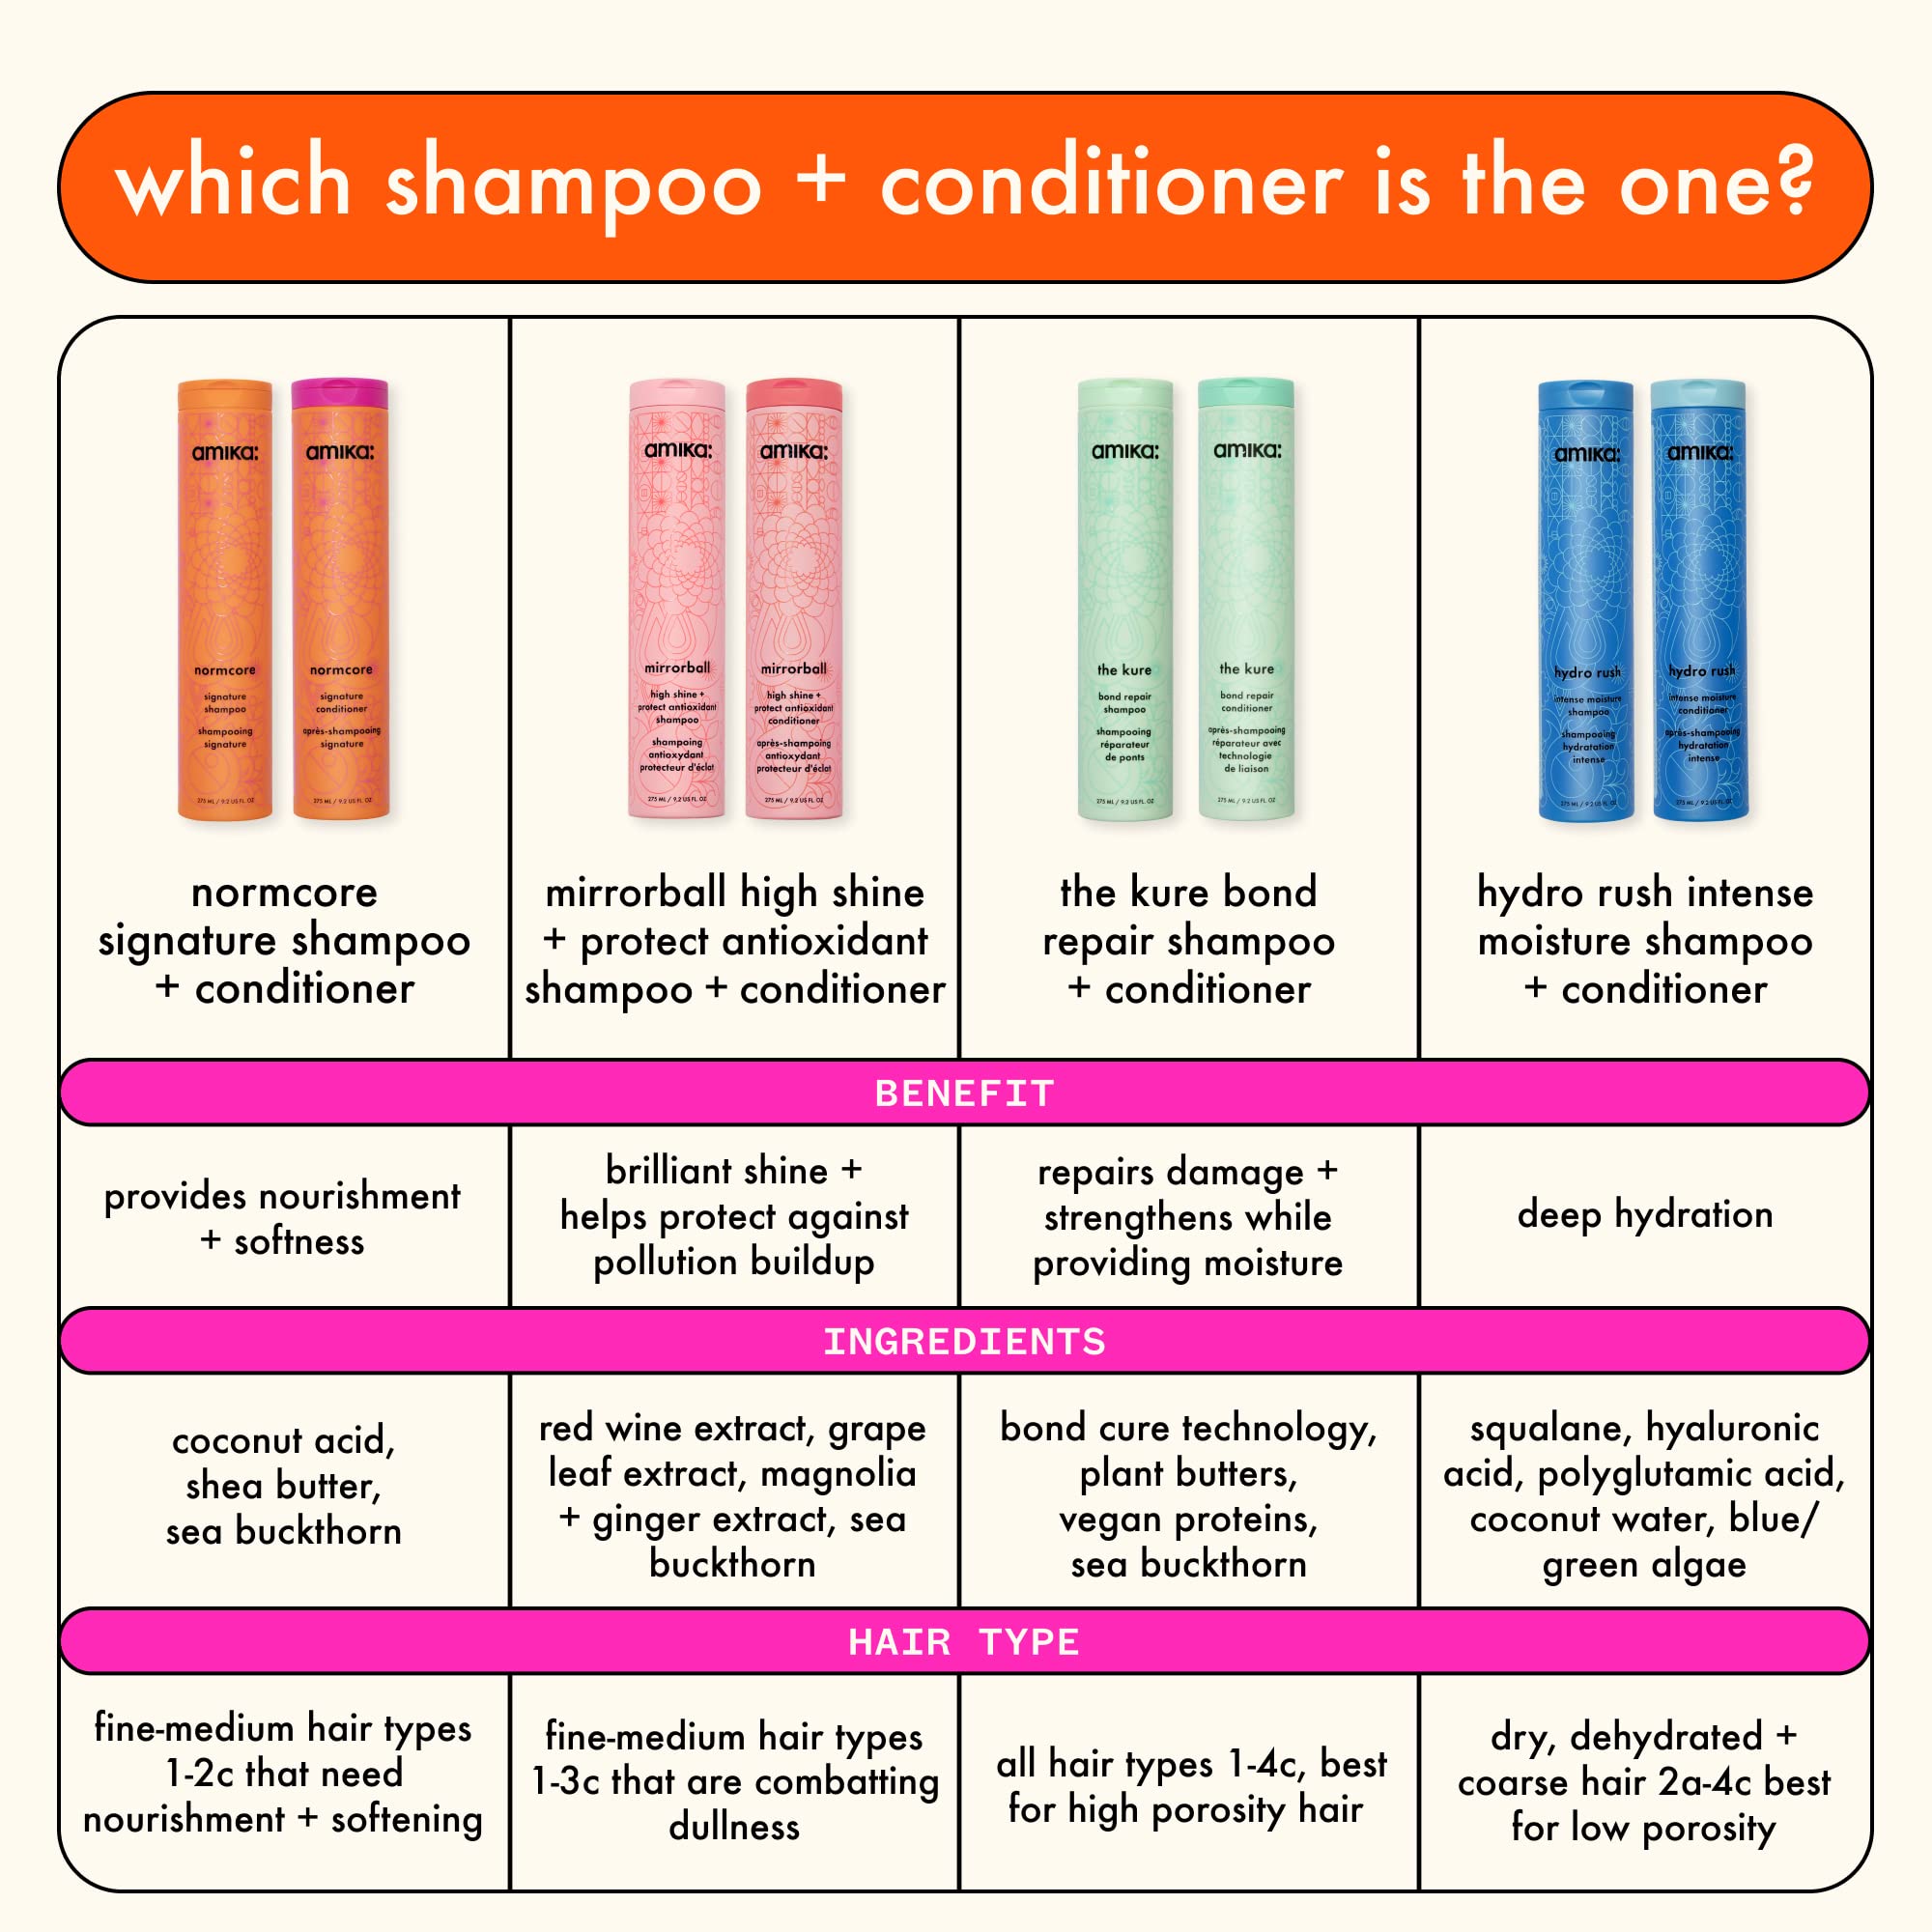 amika normcore signature shampoo